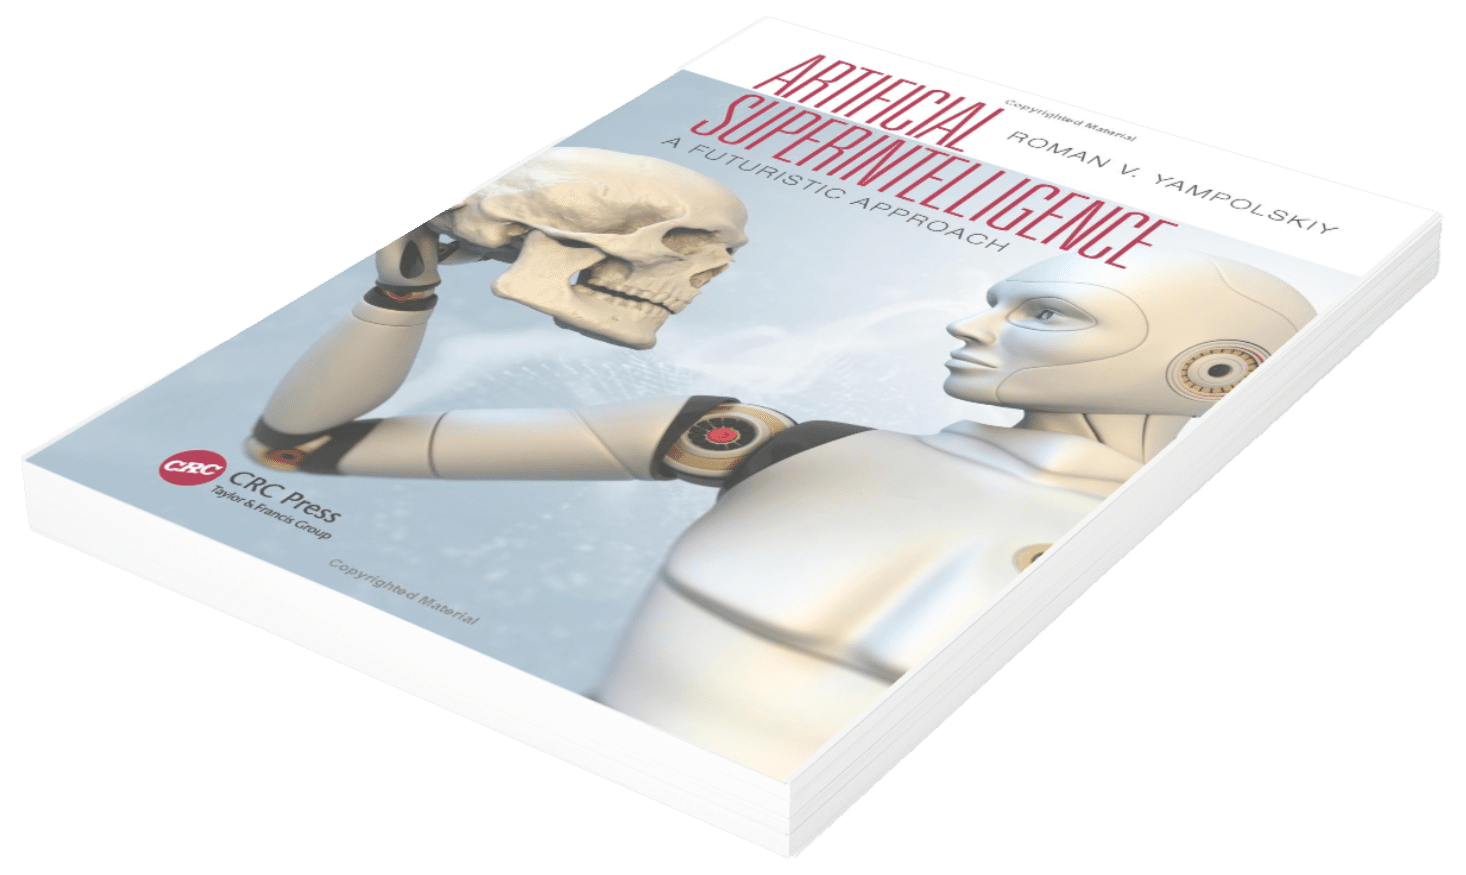 Artificial Superintelligence: A Futuristic Approach 1st Edition